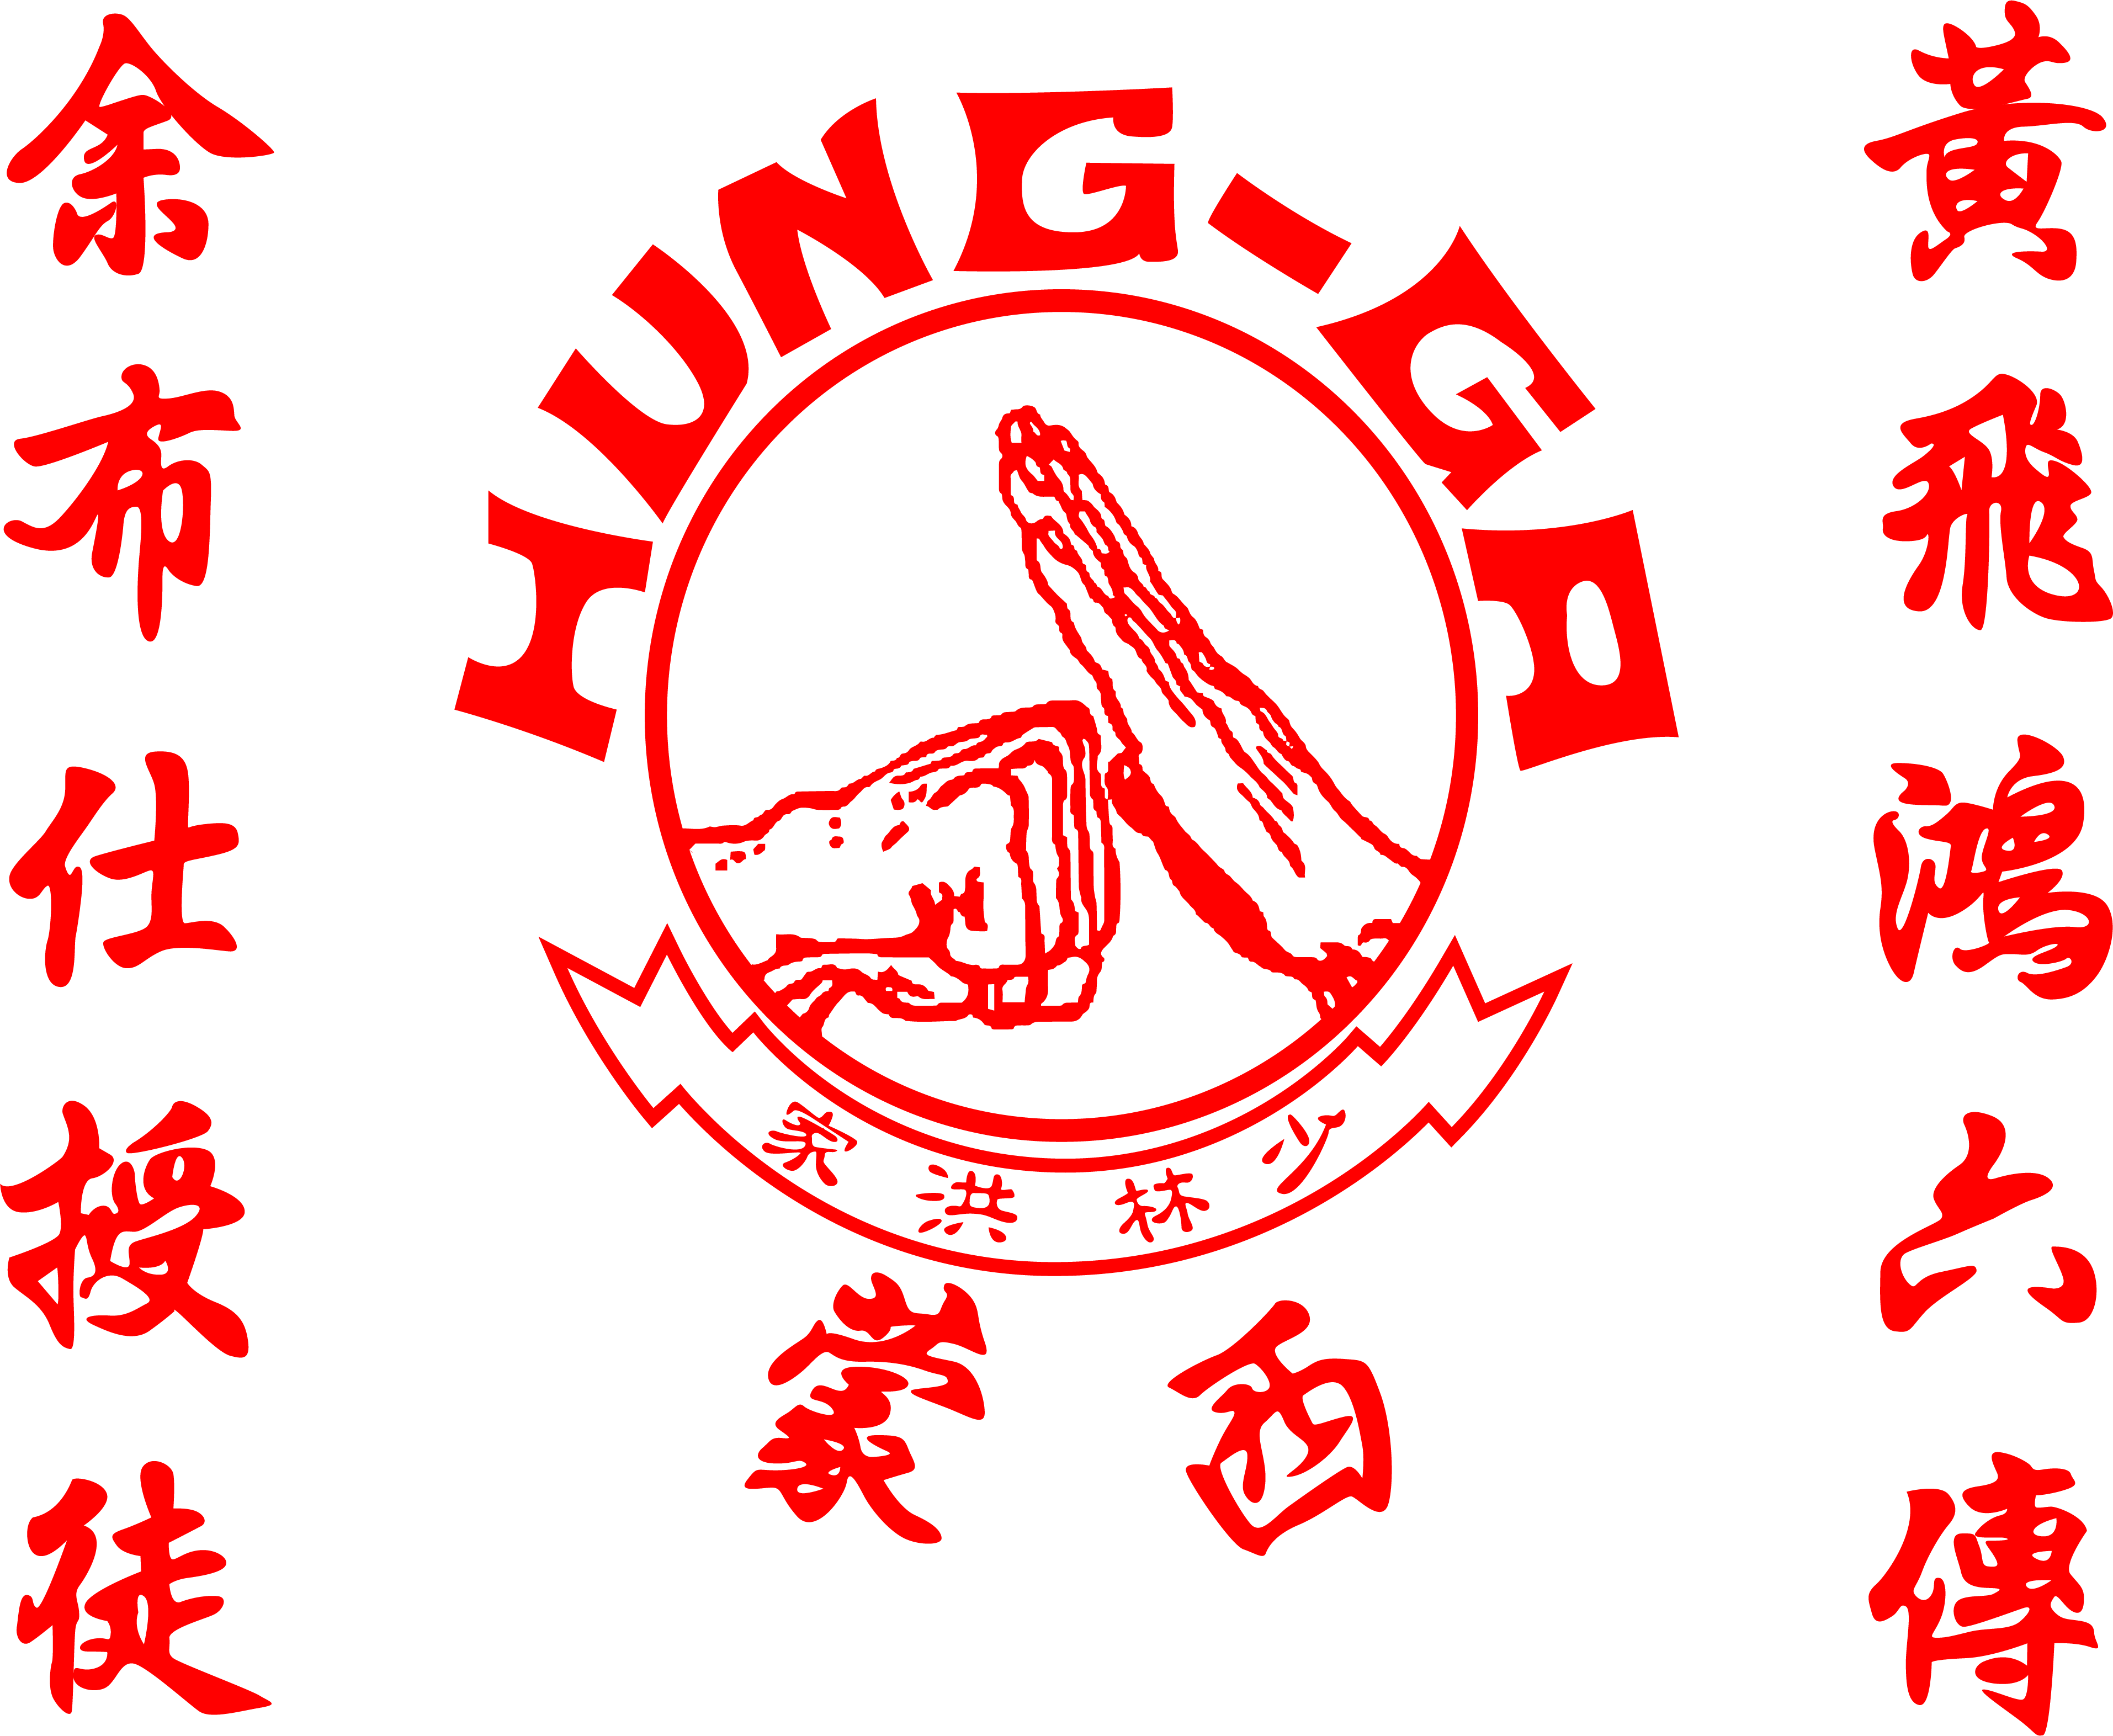 Yee's Hung Ga Kung Fu Academy, Inverness